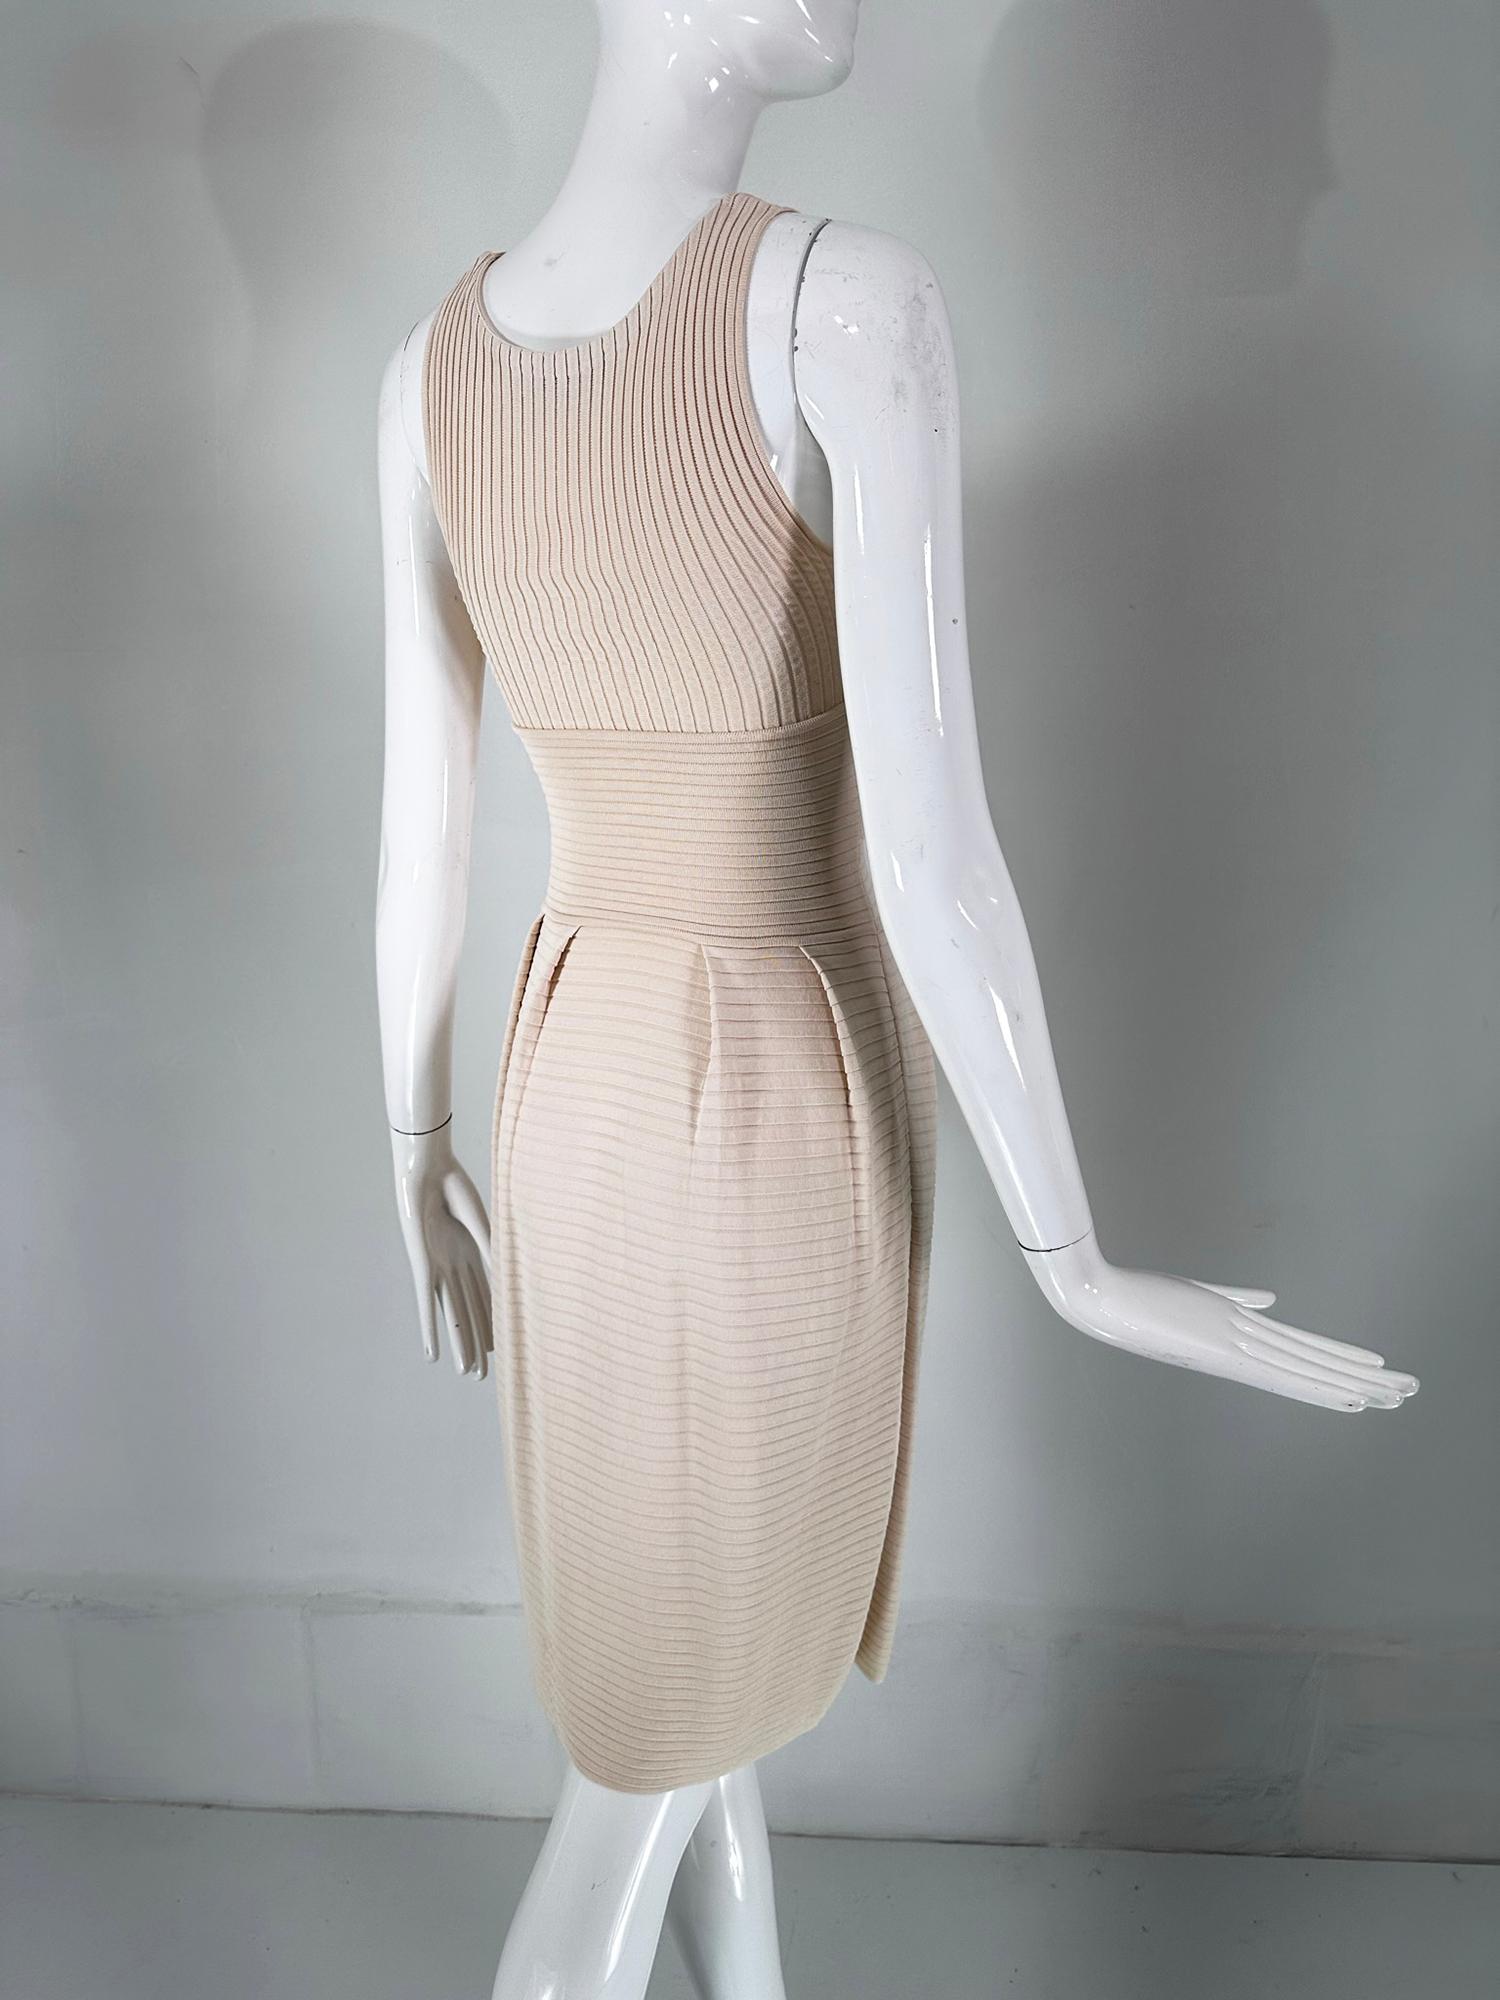 Christian Dior Paris Ribbed Knit Beige Tank Dress 2010 For Sale 3